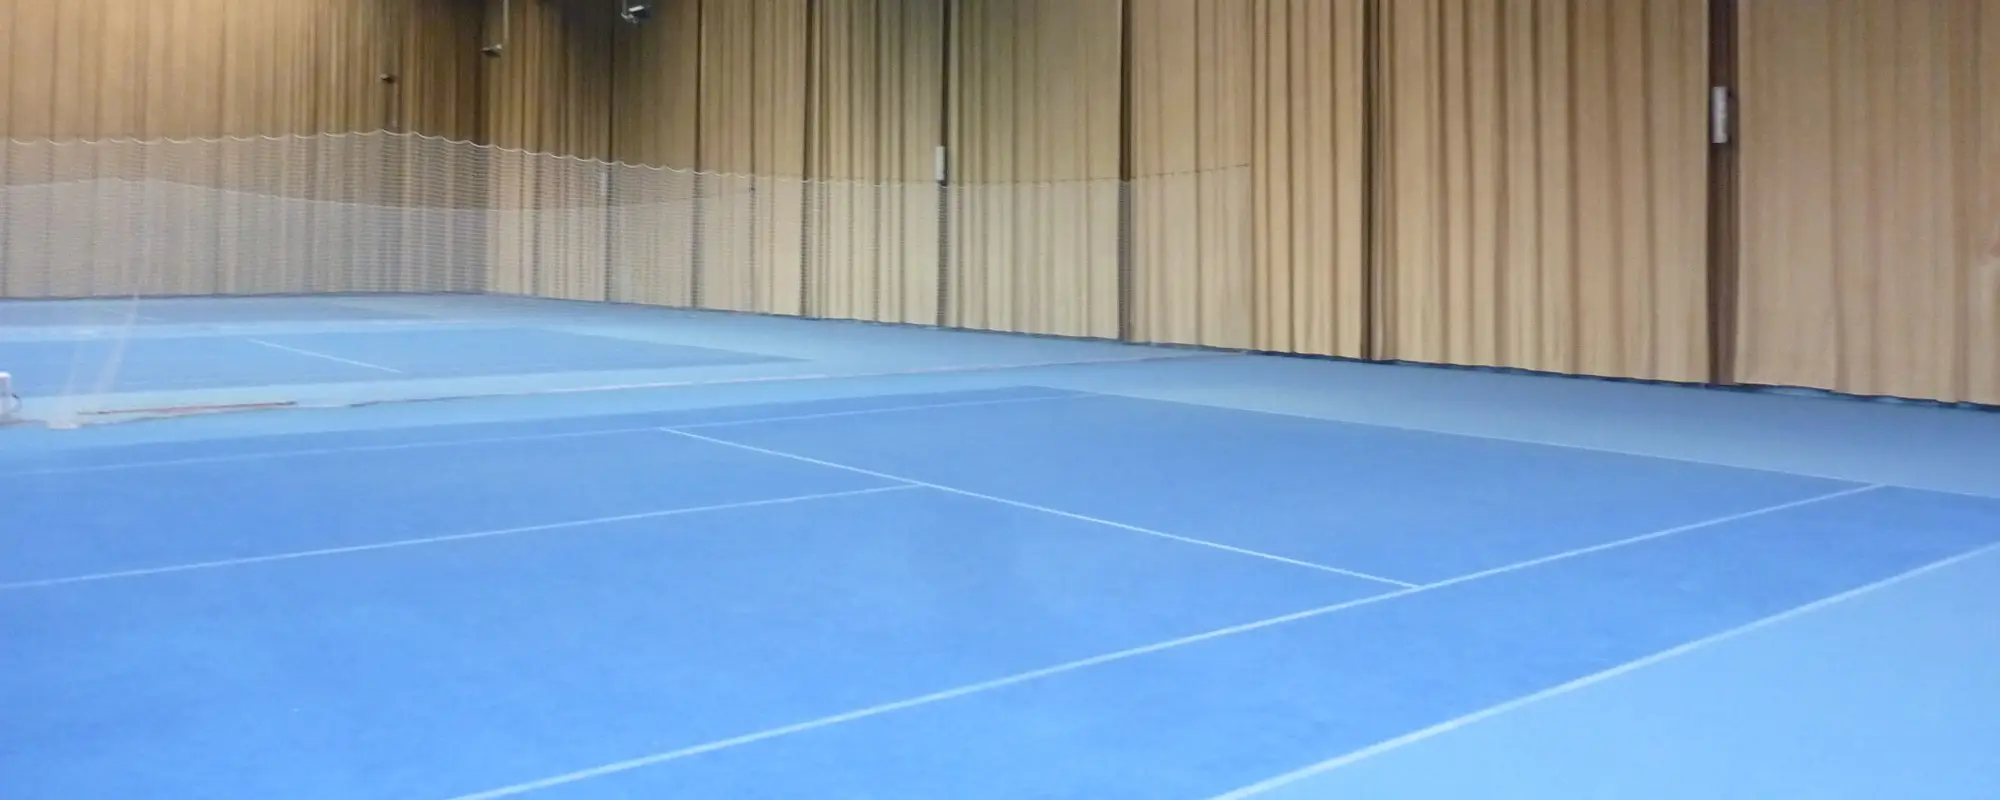 Tennis Center Remagen